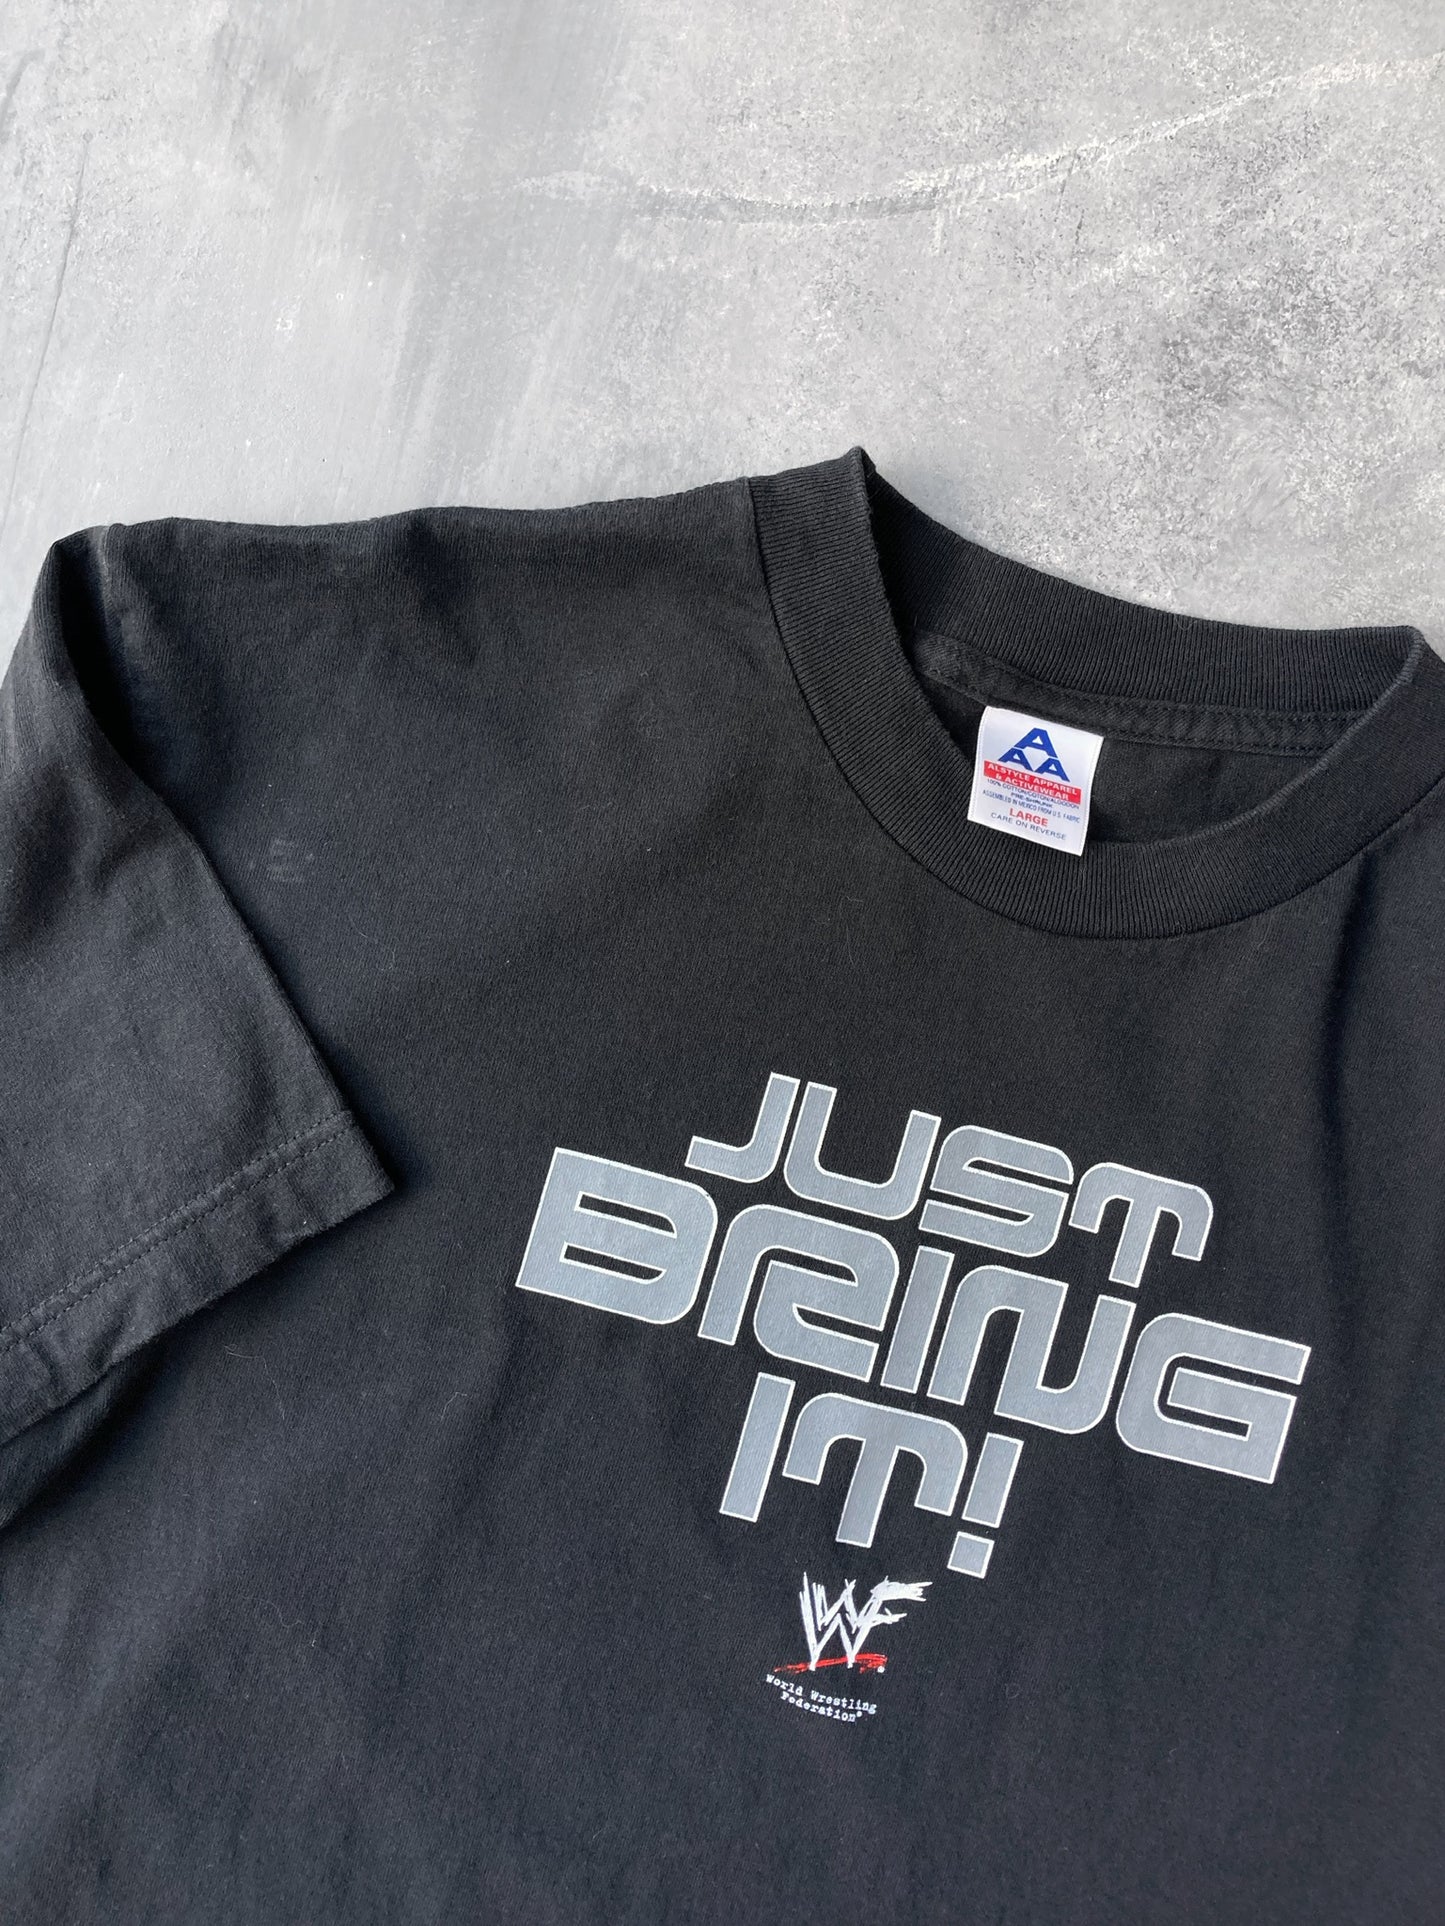 The Rock Wrestling T-Shirt 2000 - Large